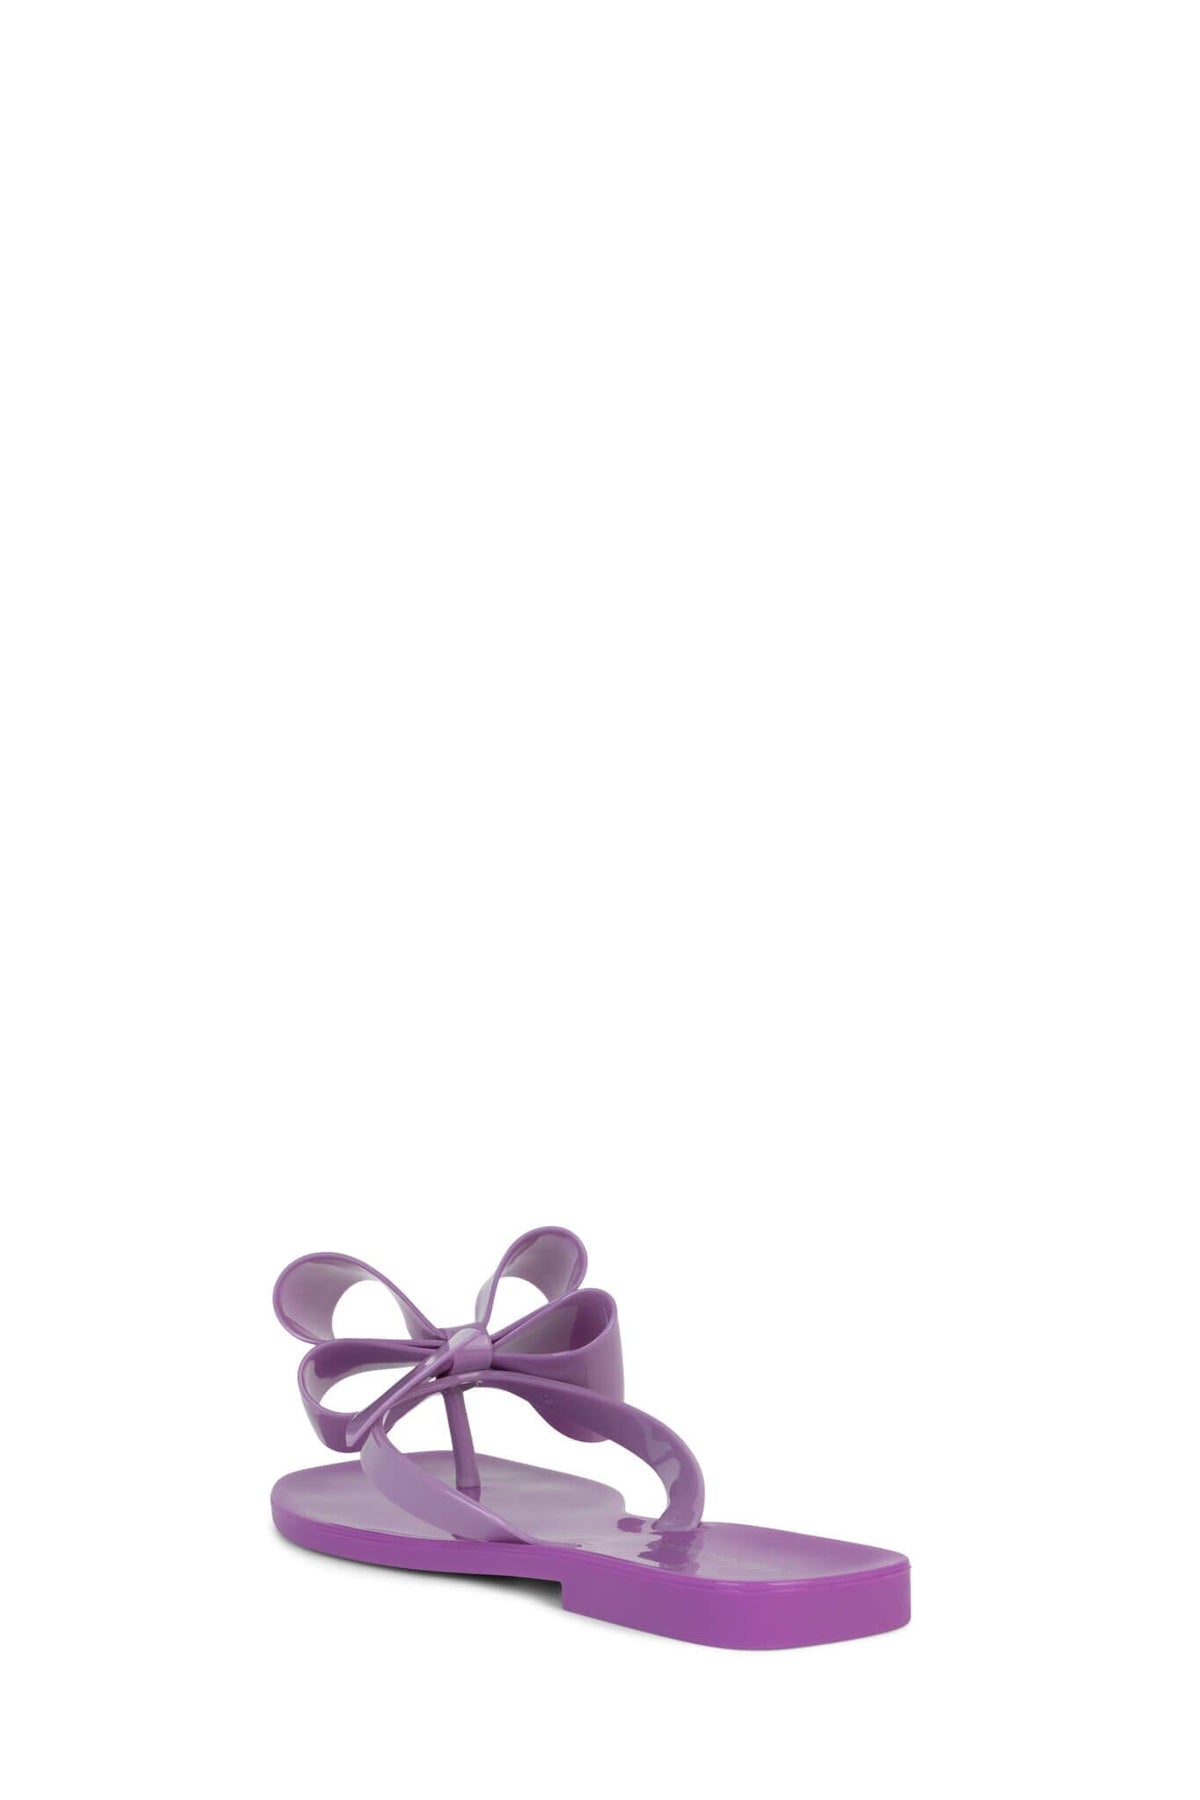 SUGARY Jeffrey Campbell Jelly Sandal Lilac Shiny